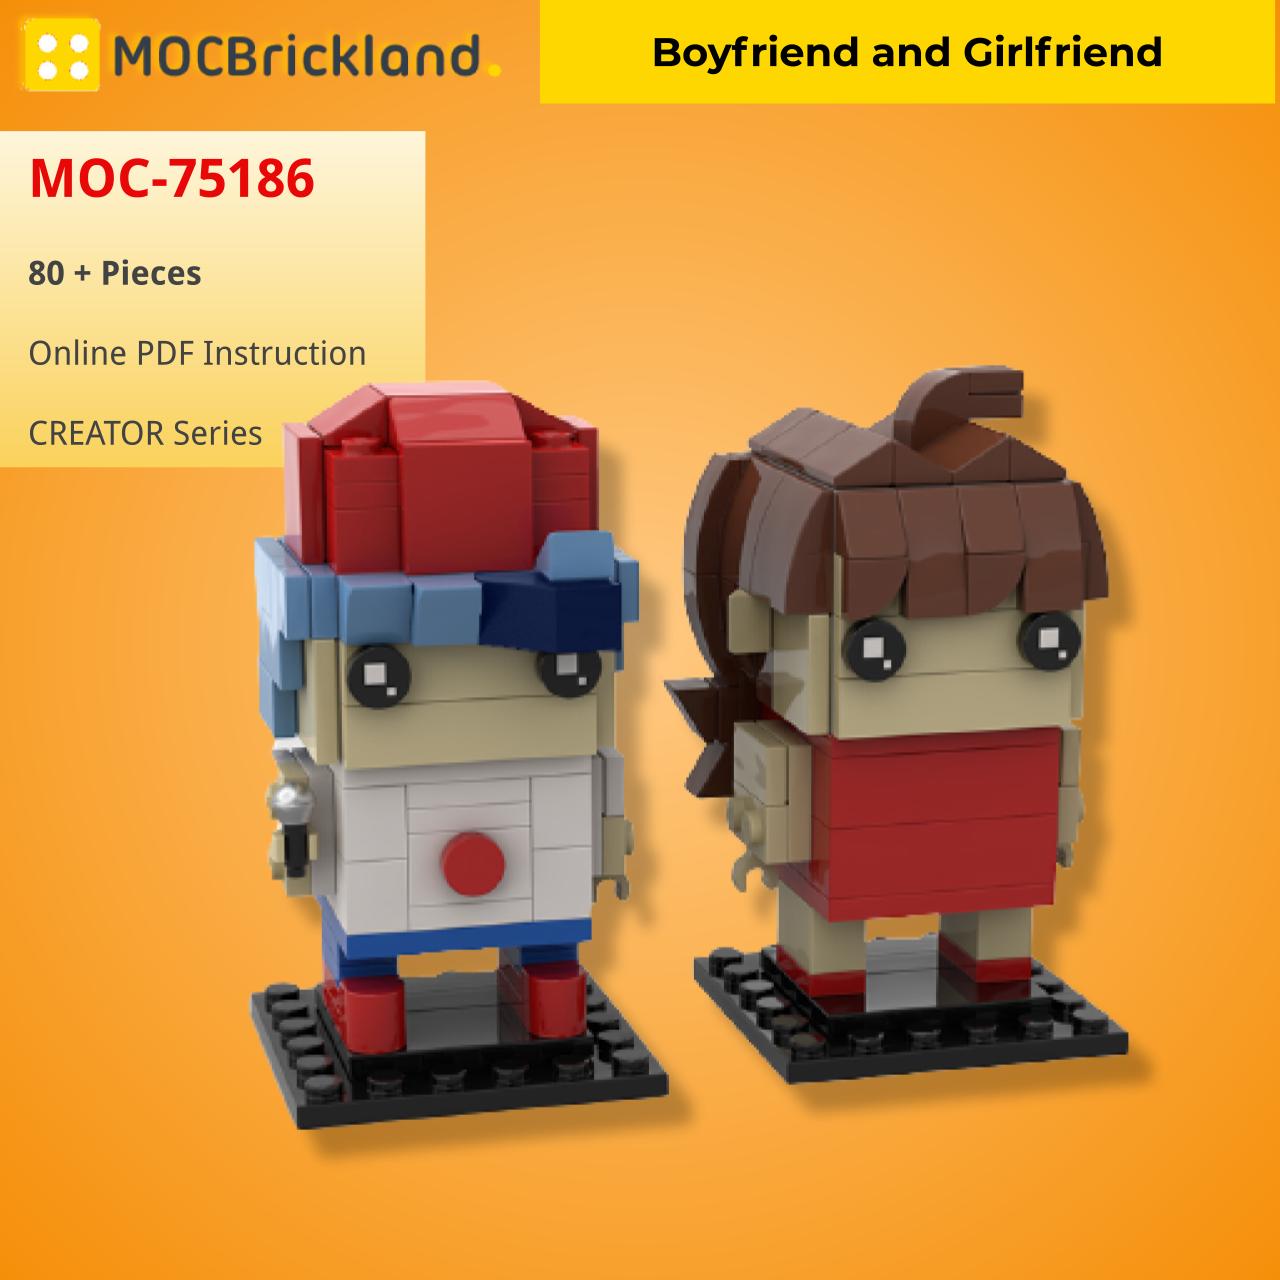 MOCBRICKLAND MOC-75186 Boyfriend and Girlfriend